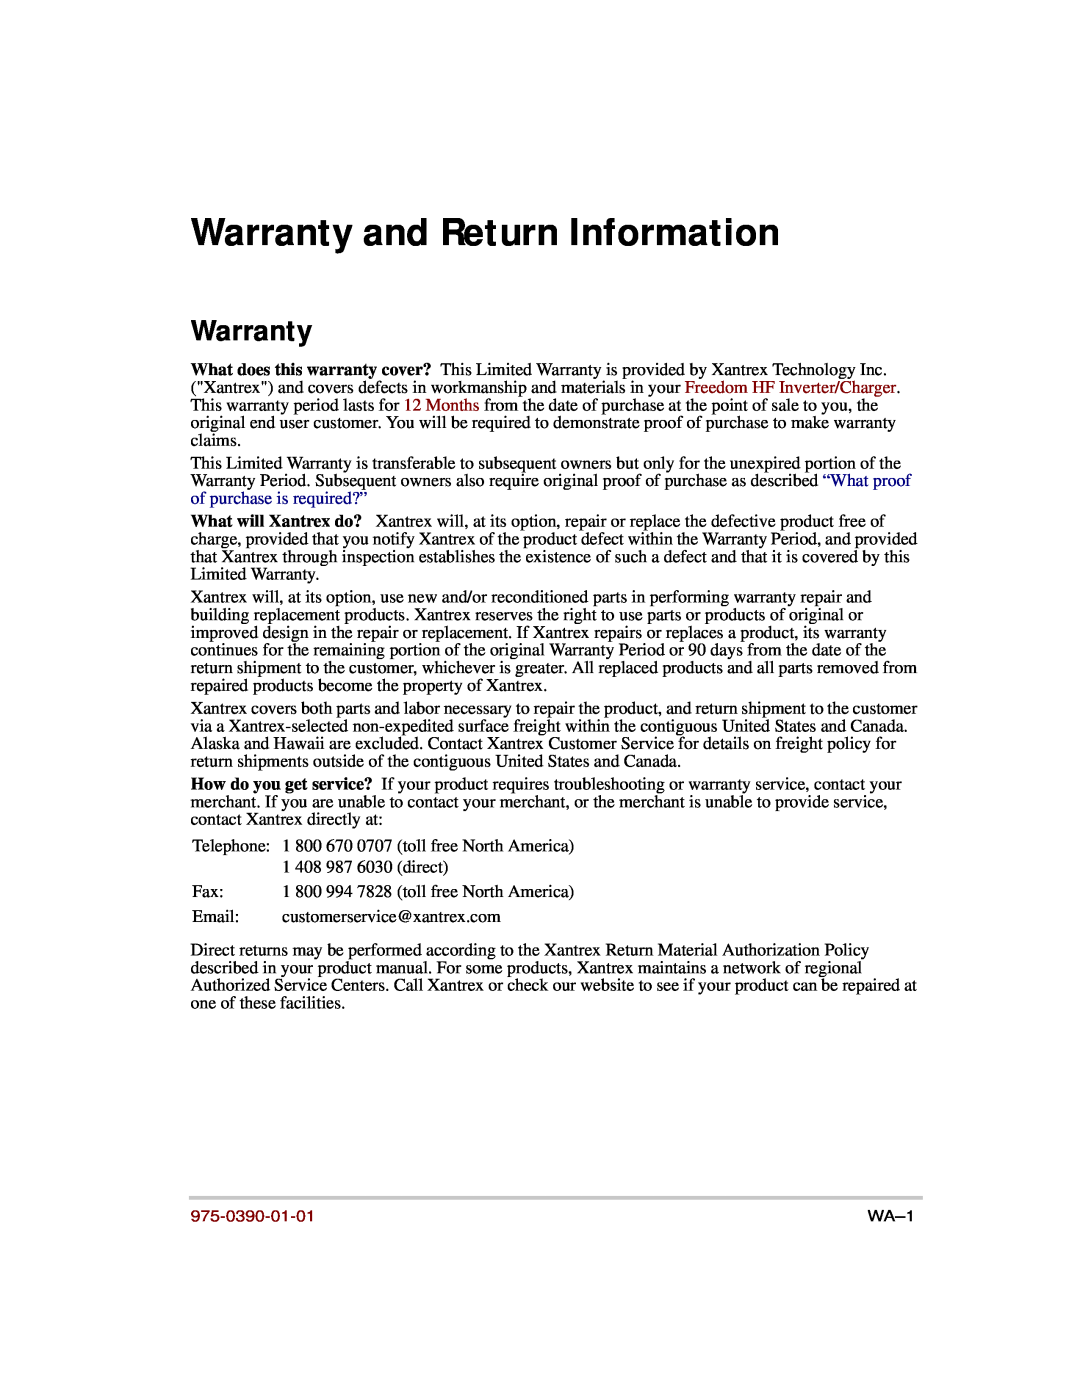 Xantrex Technology HF 1800, HF 1000 manual Warranty and Return Information, 975-0390-01-01, WA-1 